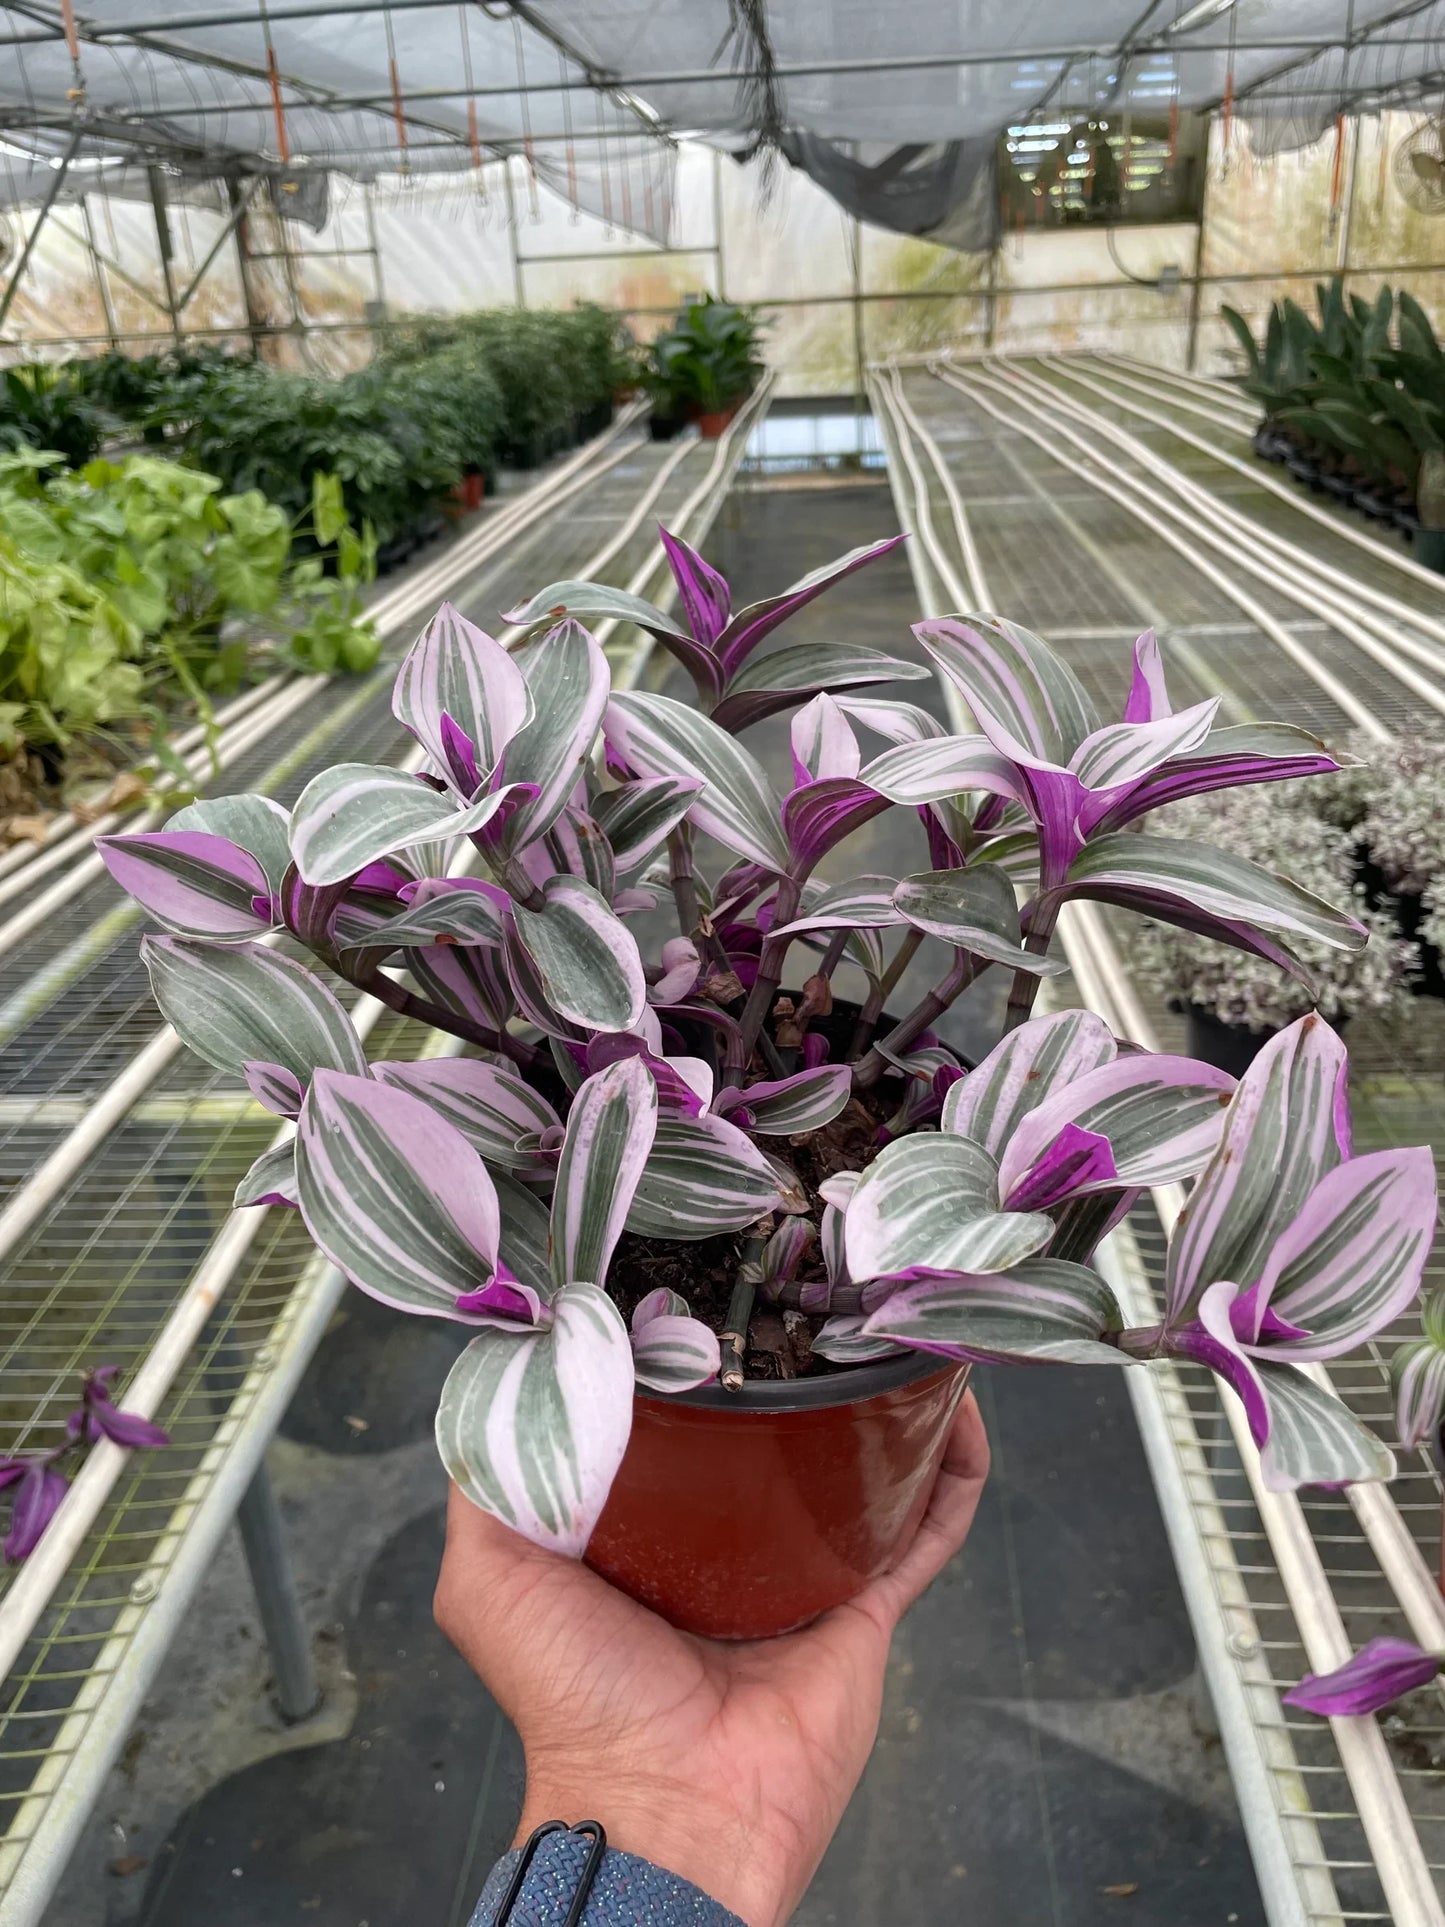 Tradescantia Albiflora 'Nanouk' Plant- Colorful, Low Maintenance, Trailing Tropical Houseplant- (4" or 6" Nursery Pot)